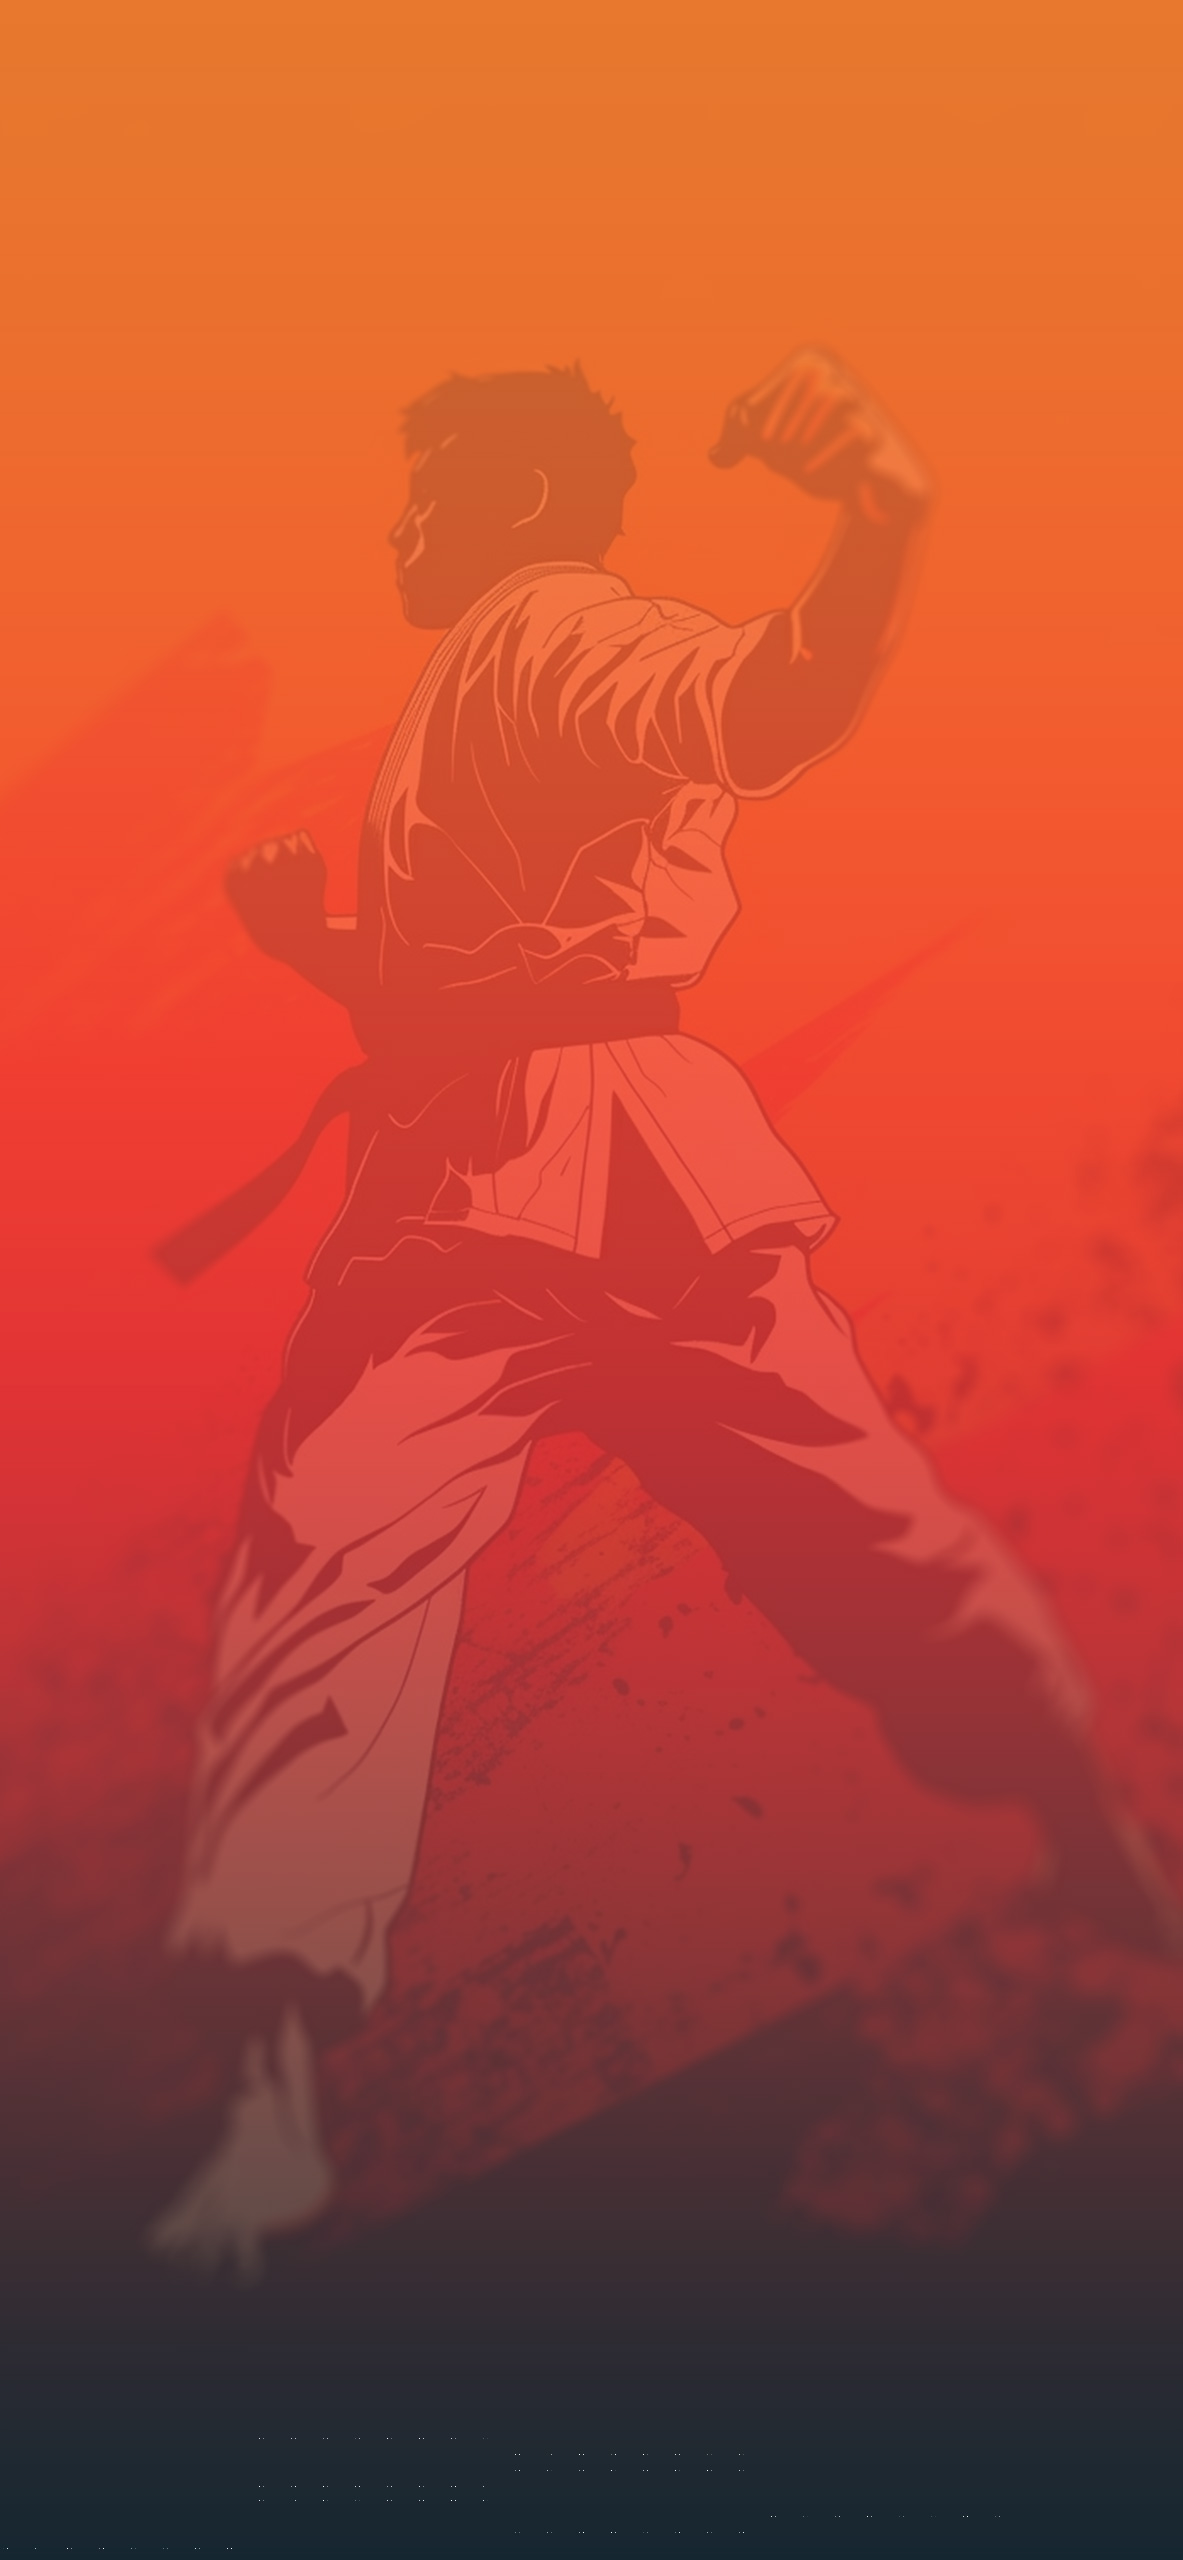 karate orange background